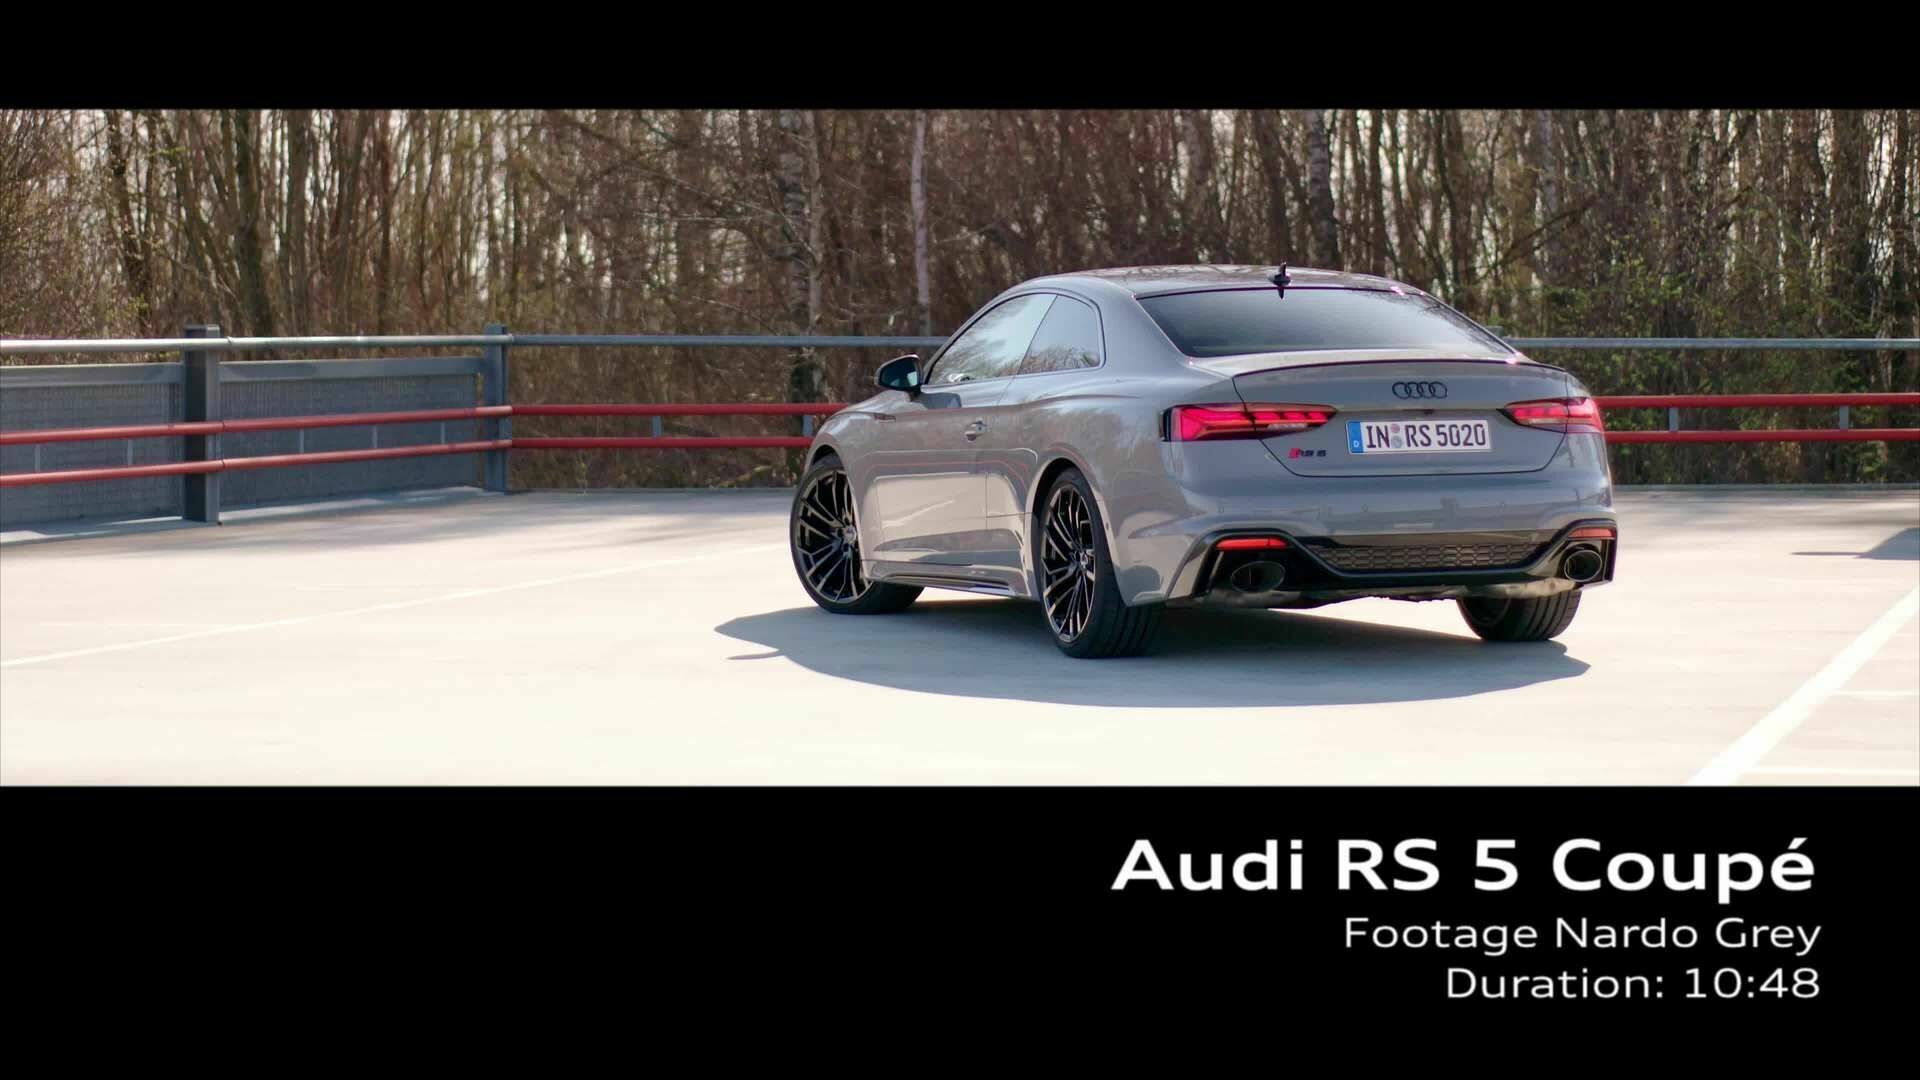 Footage: Audi RS 5 Coupé Nardo grey 